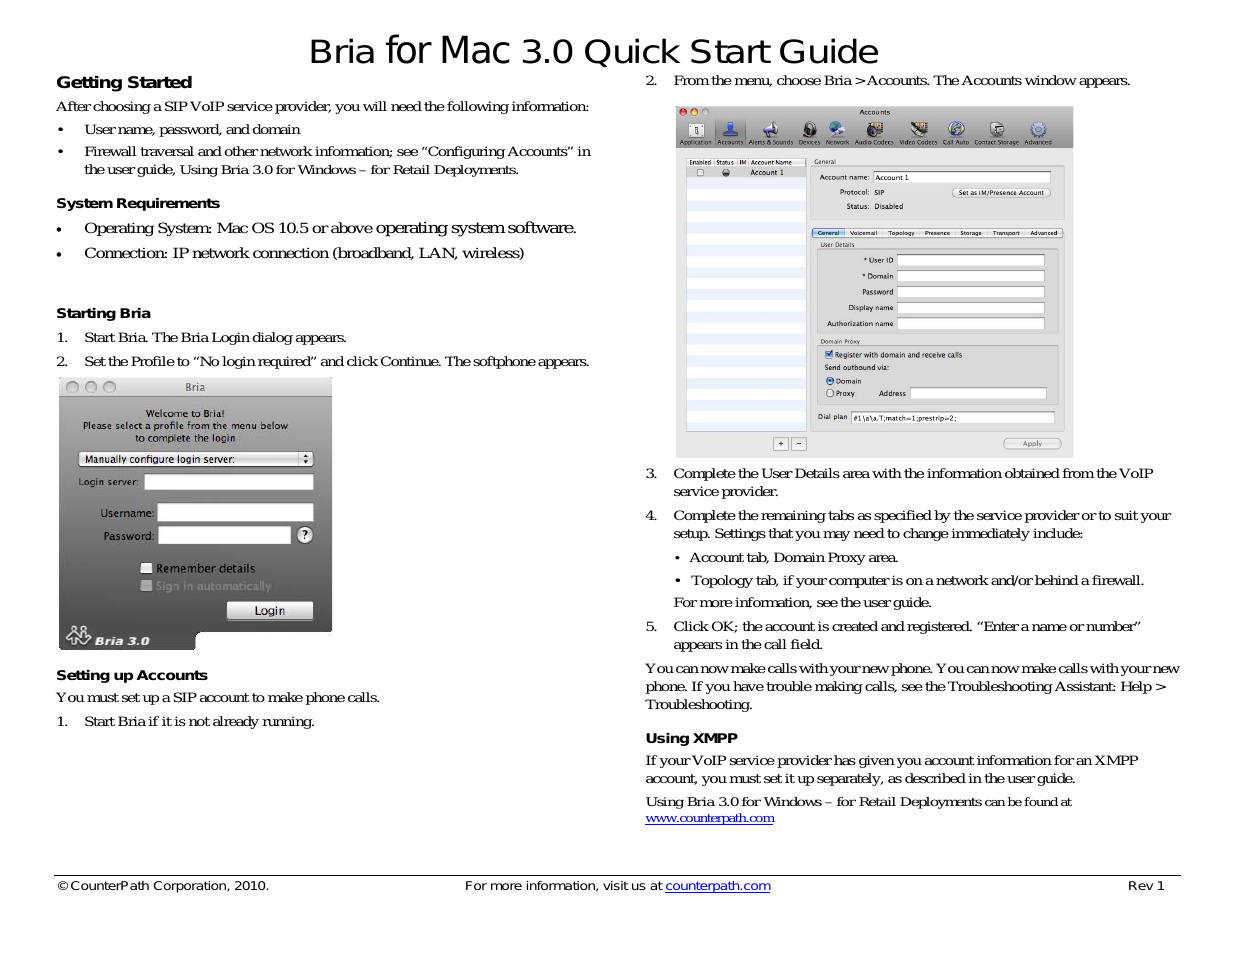 Bria 3.0 for Mac Quick Start Guide